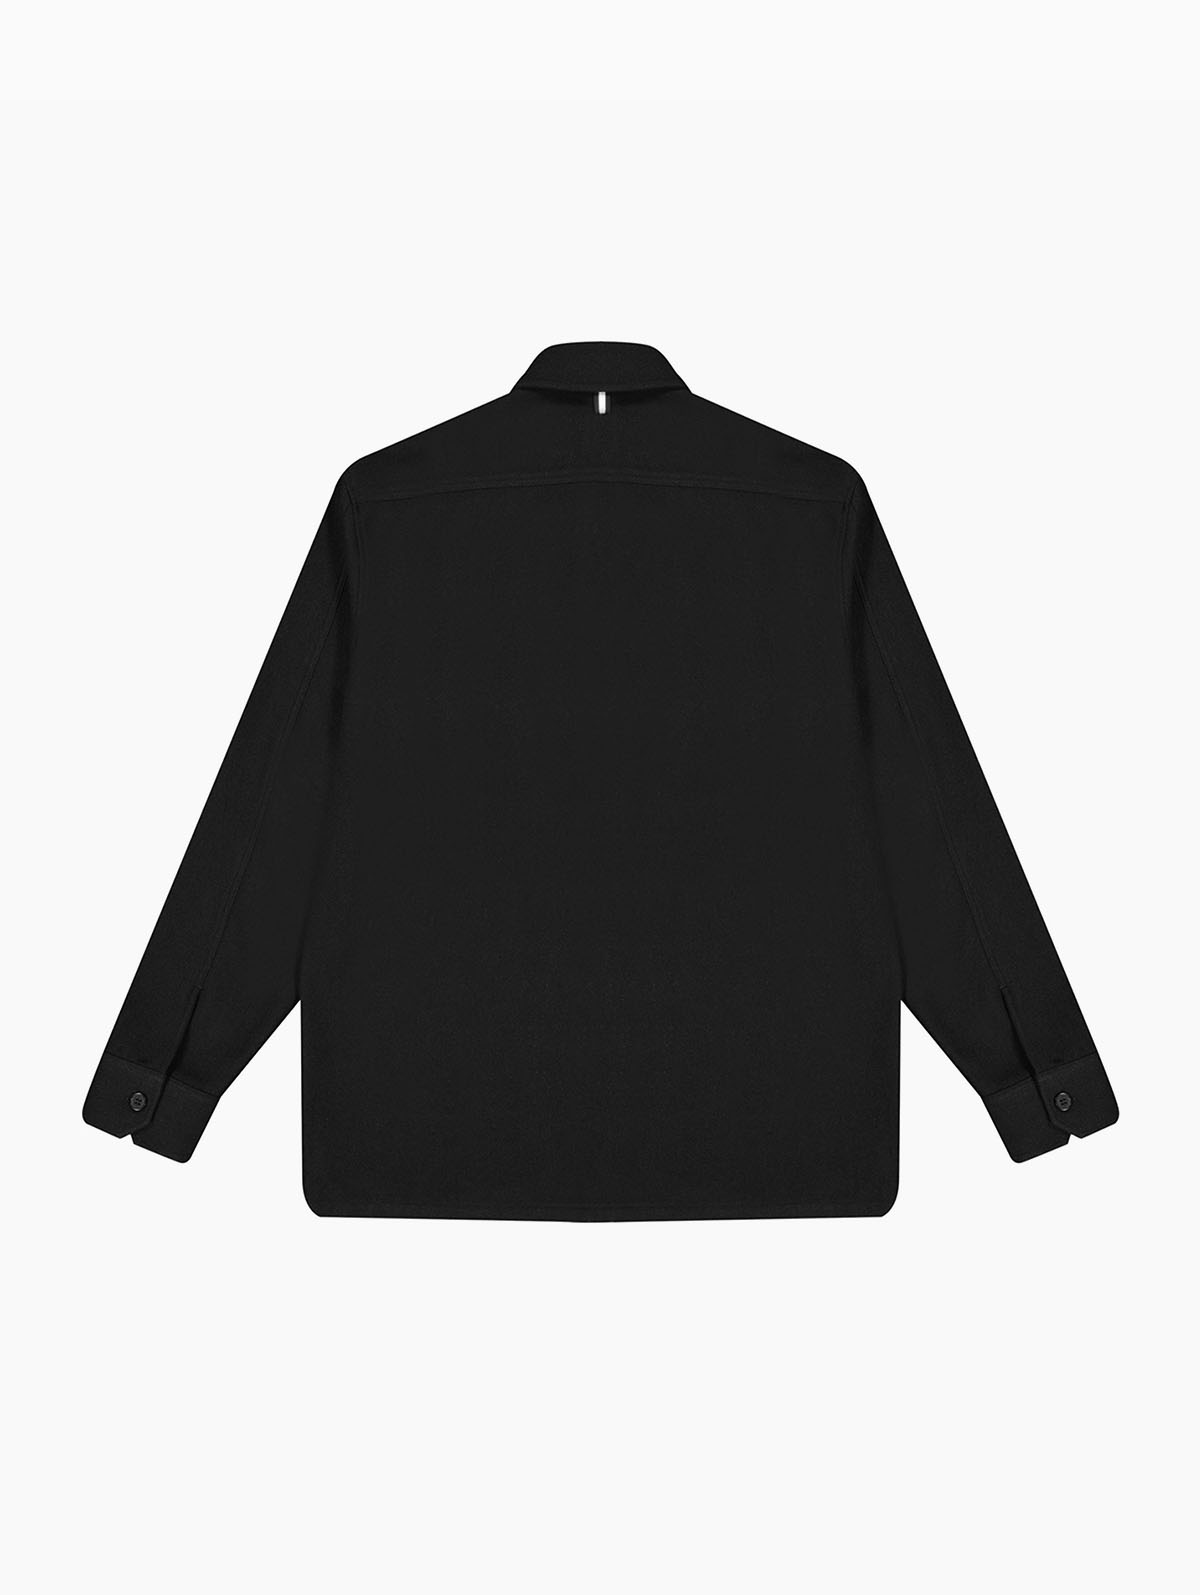 Bil's - Copenhagen Unisex Black Overshirt